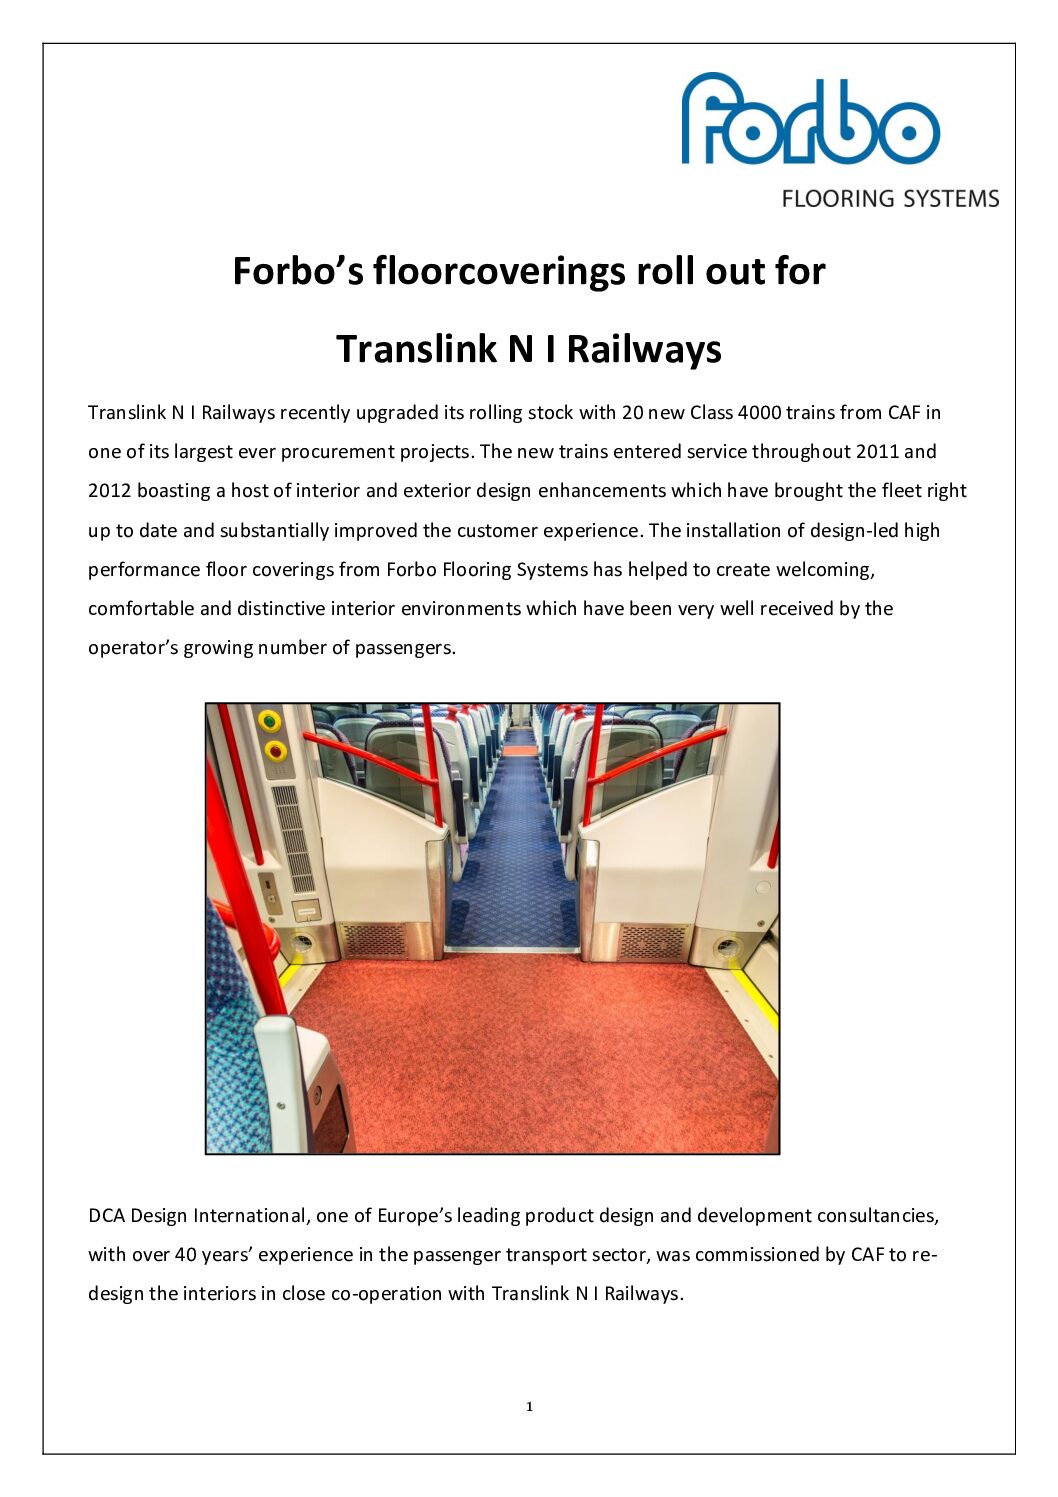 Forbo Flooring – Translink NI Railways Case Study